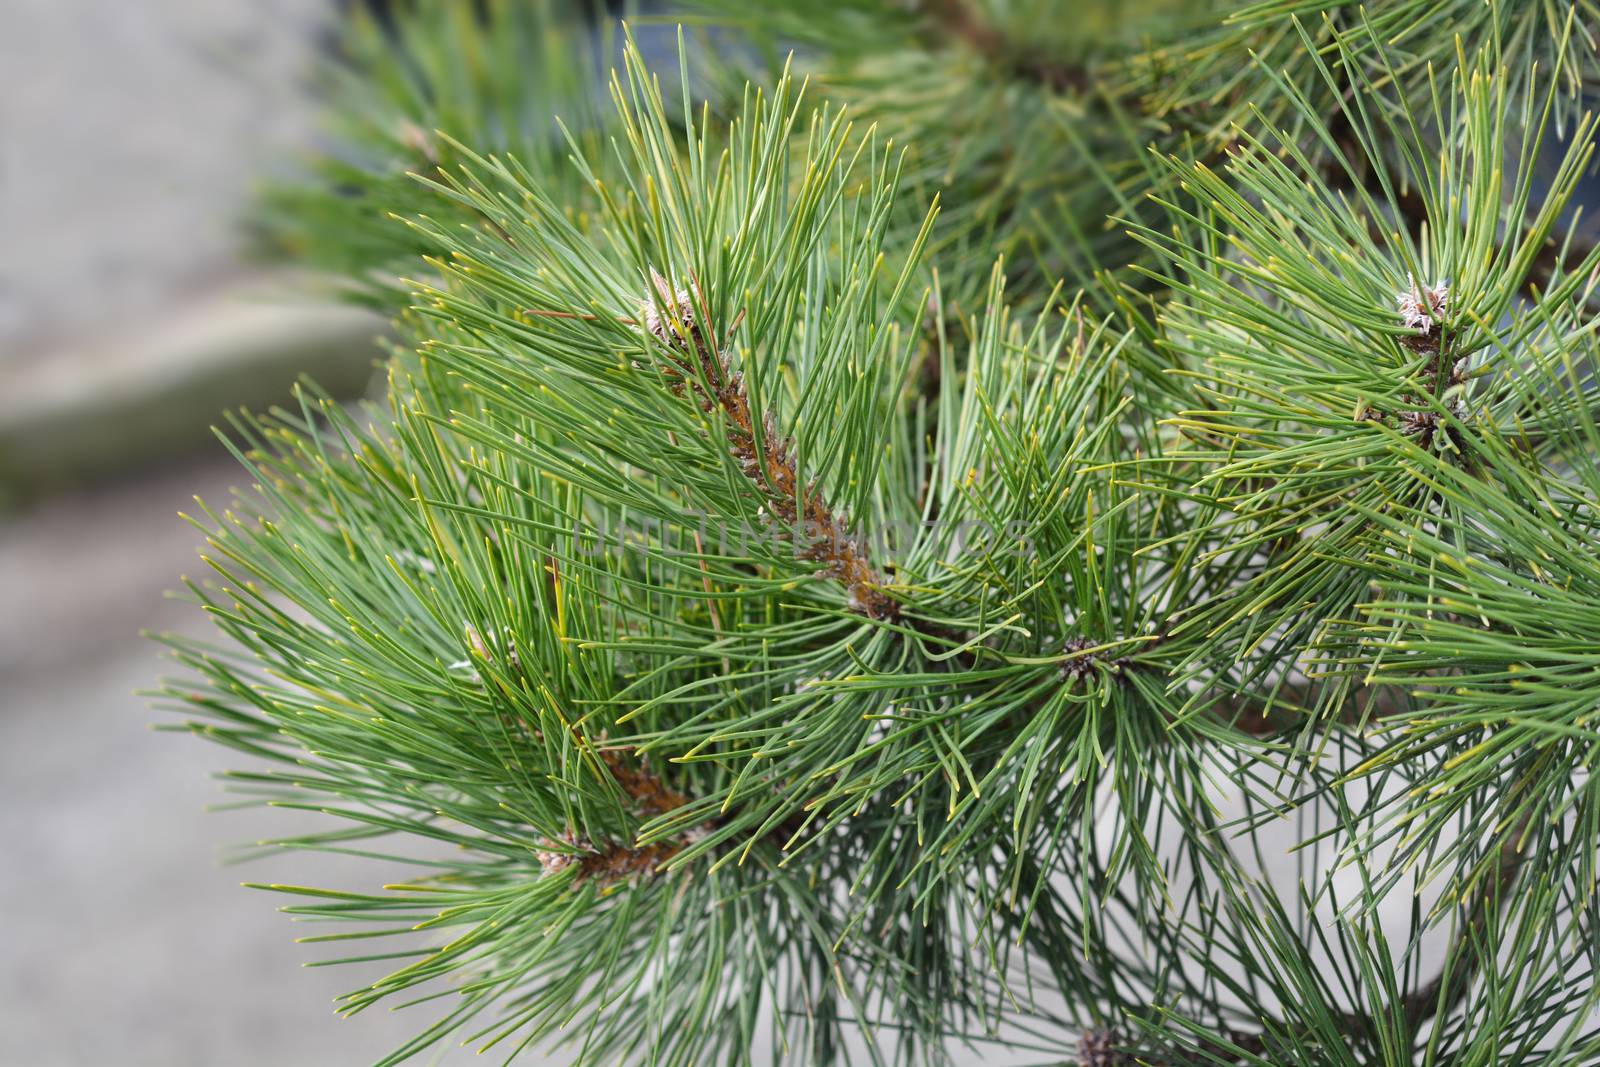 Black pine by nahhan